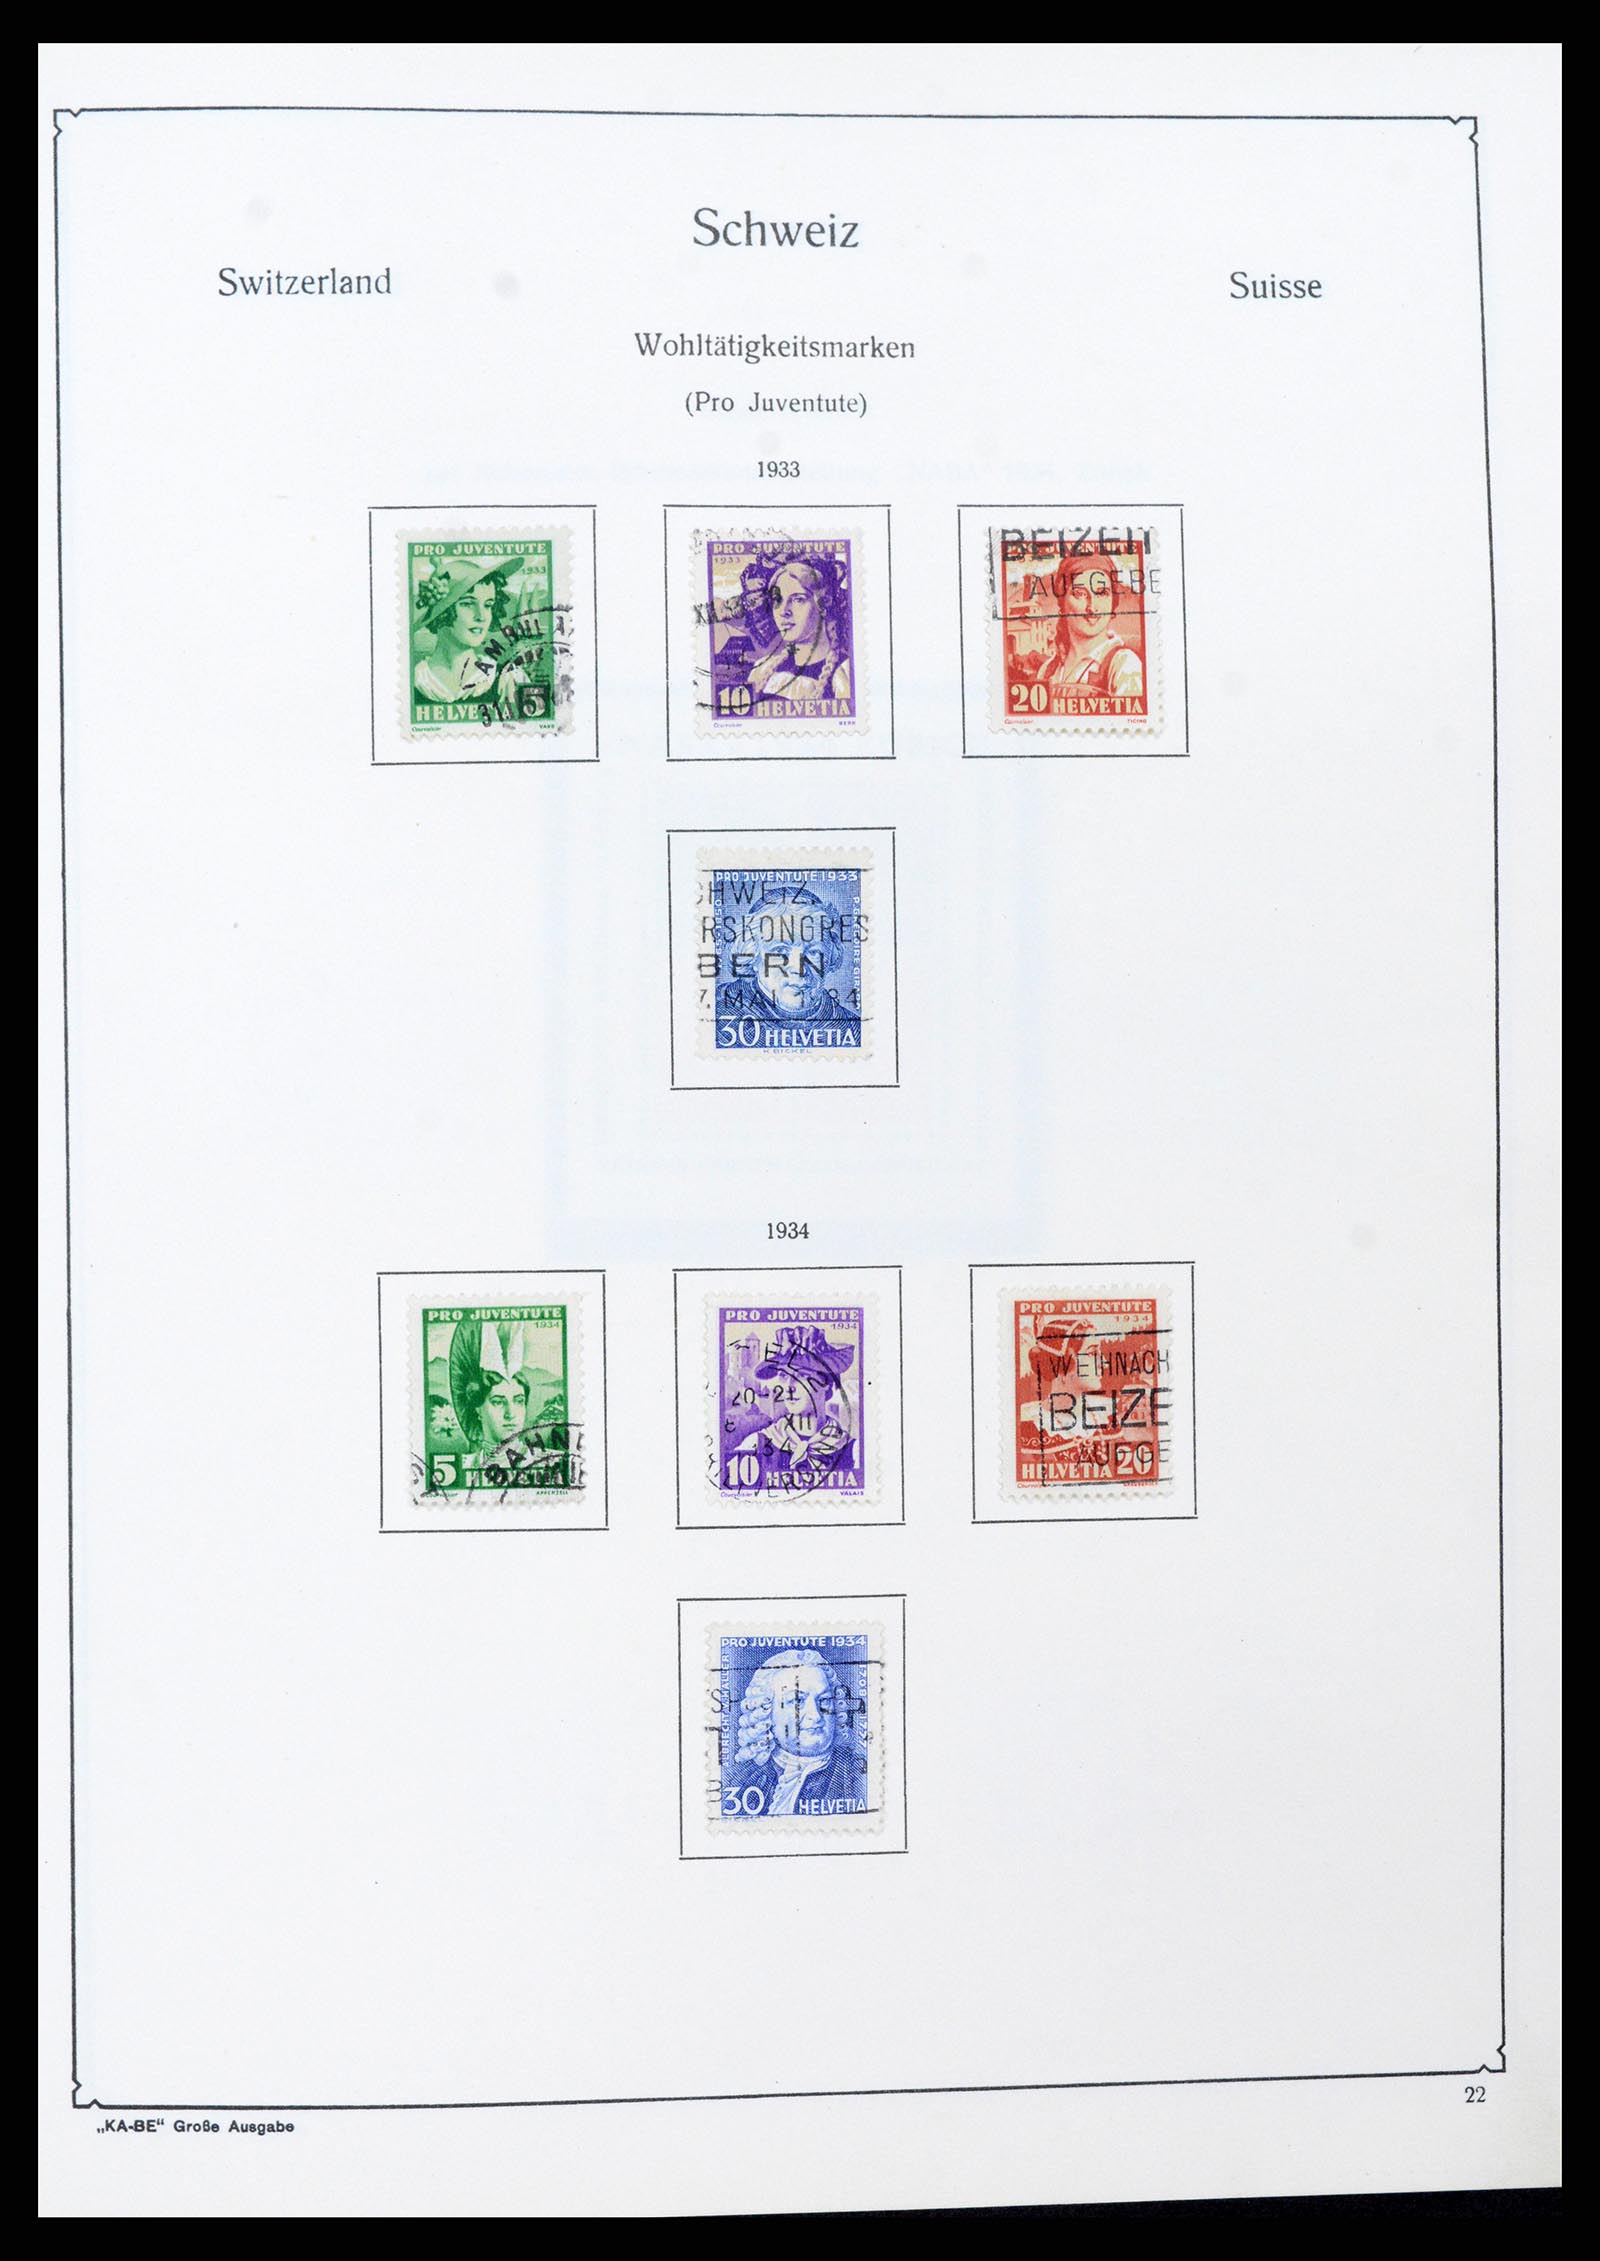 37588 021 - Stamp collection 37588 Switzerland 1854-1974.